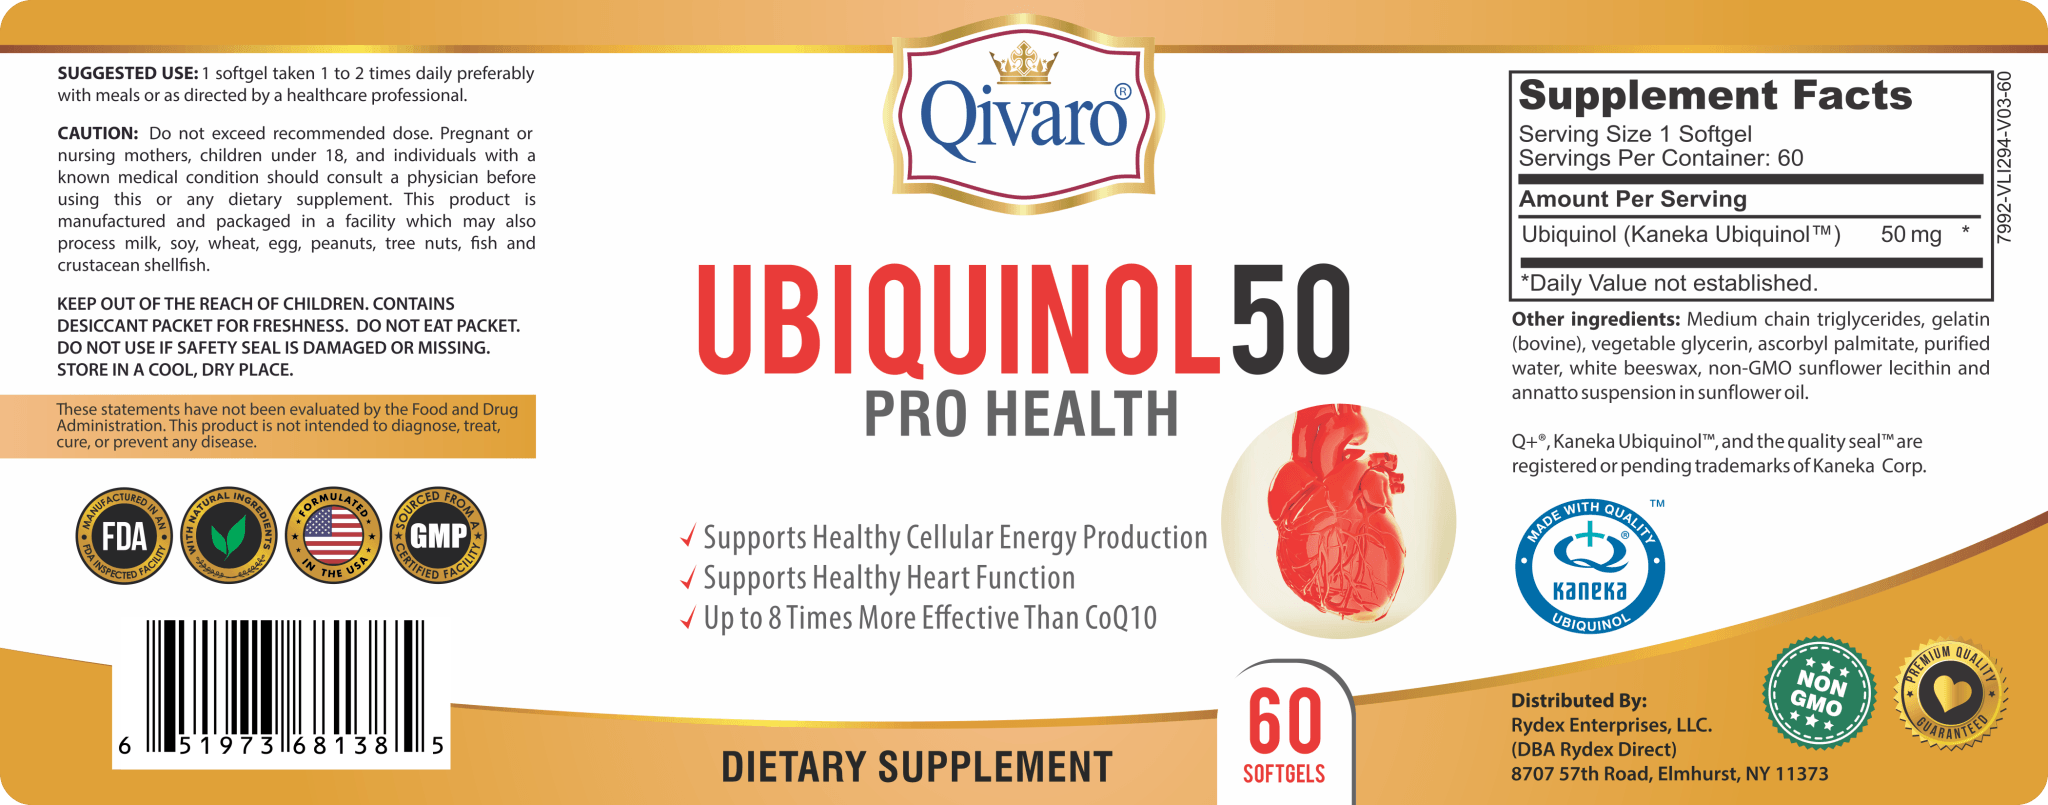 Ubiquinol 50 Pro Health 還原型COQ10 (60 softgels) - Qivaro USA